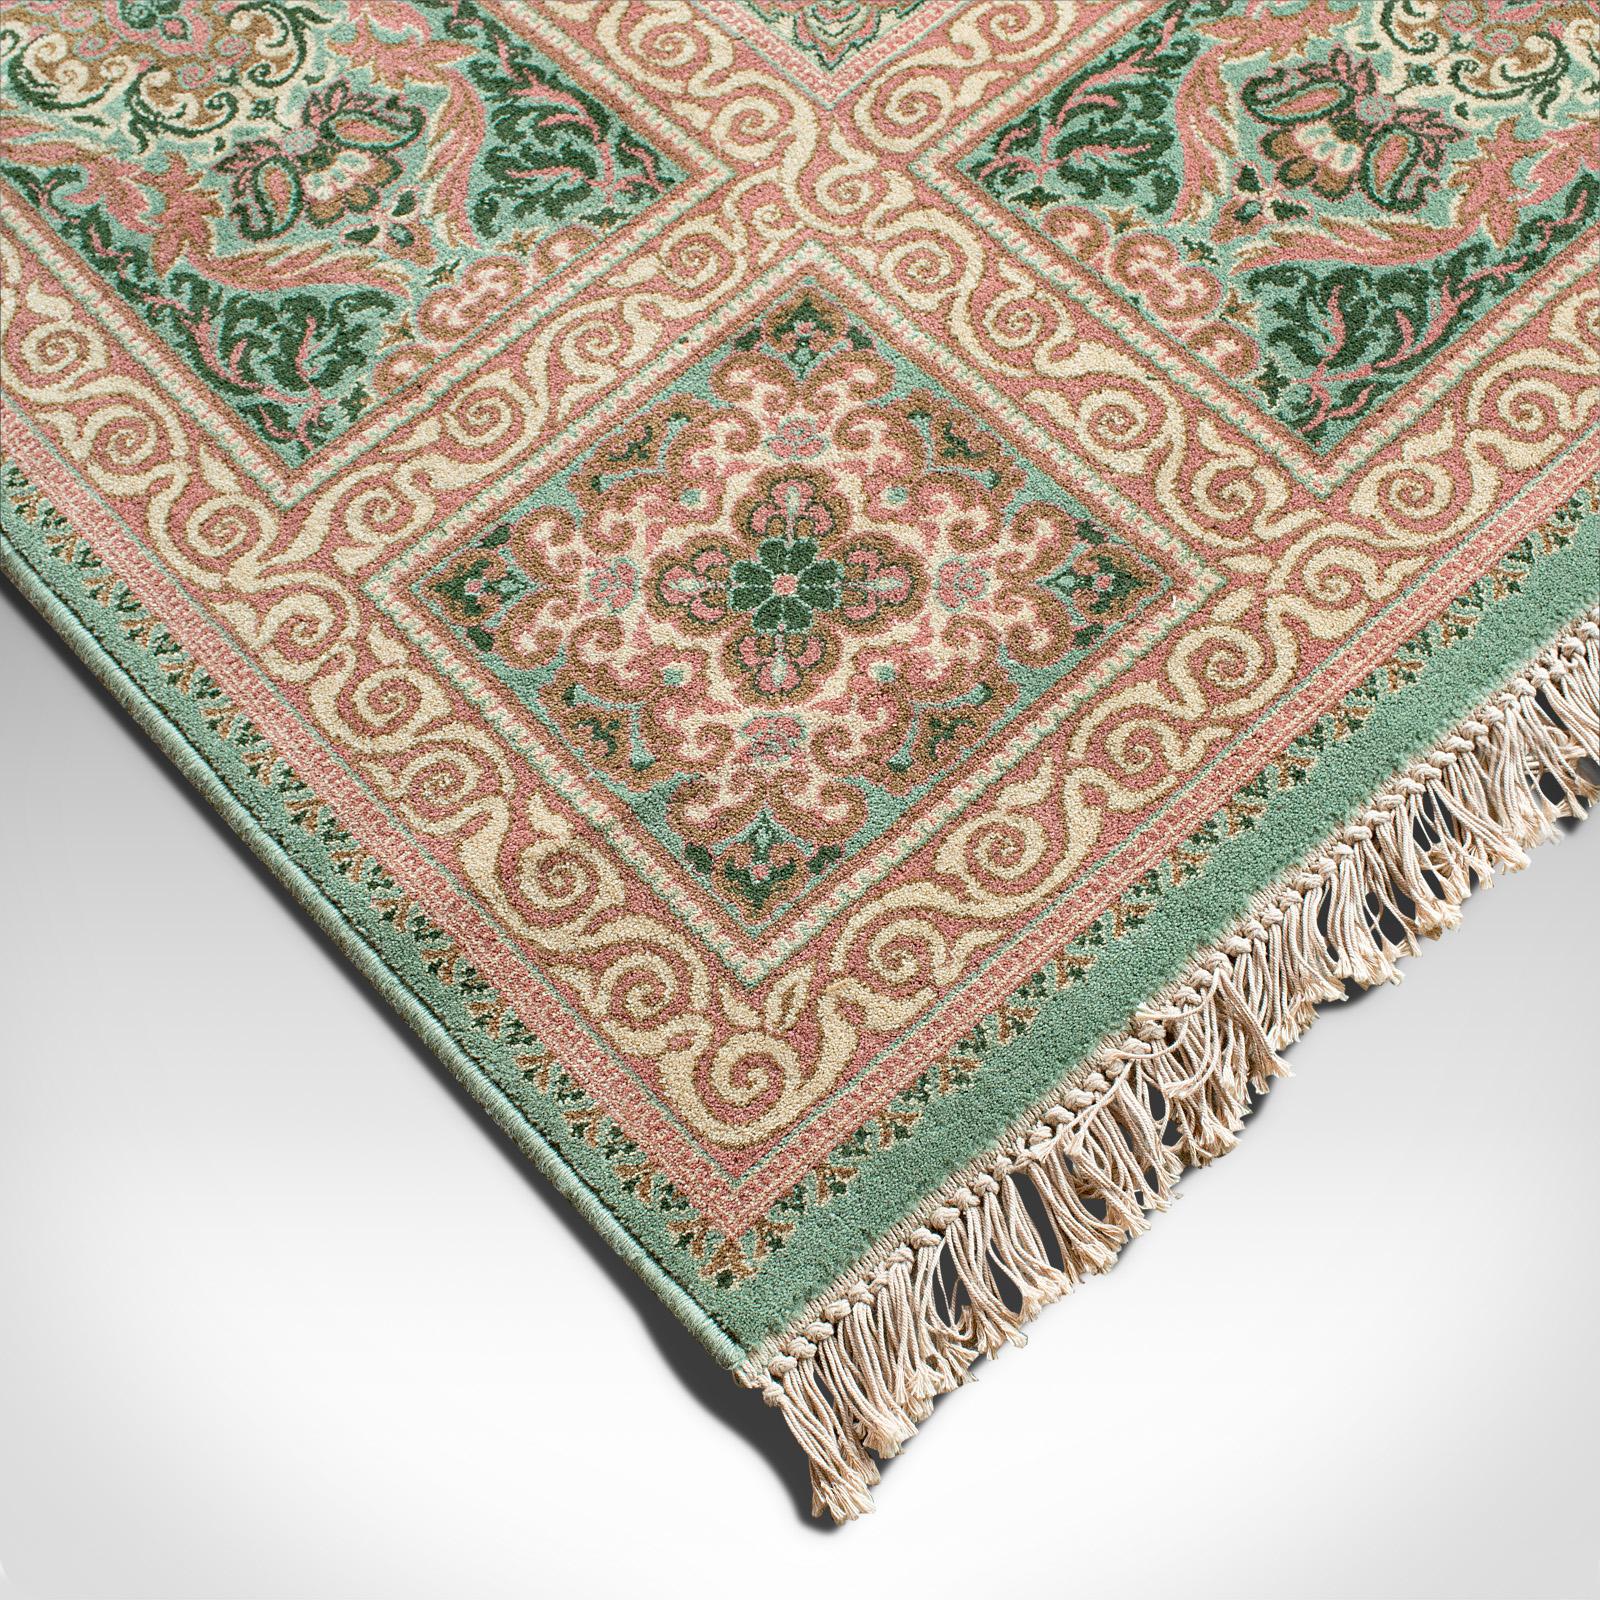 Very Large 16 Foot Vintage Keshan Rug, Persian, Room Sized, Decorative, Carpet For Sale 1